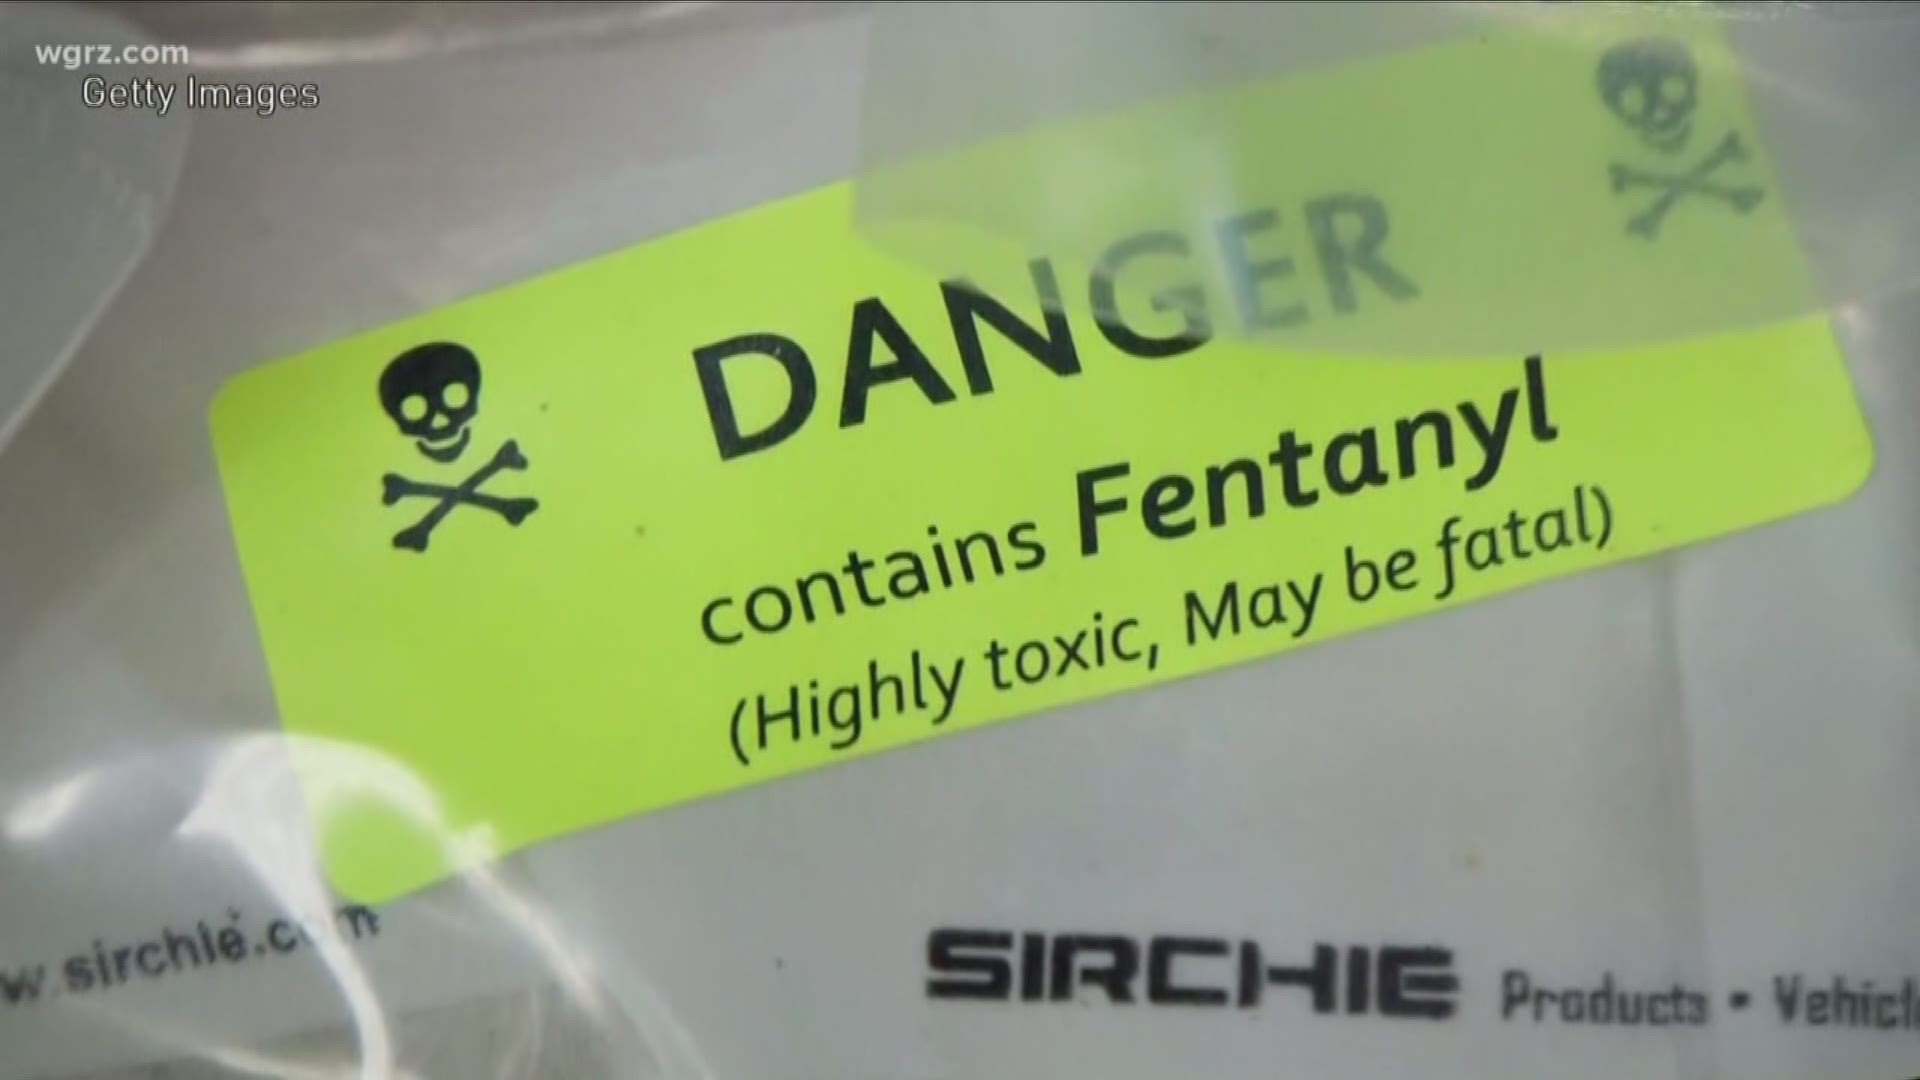 Senator Schumer introduces bill to sanction fentanyl trade.